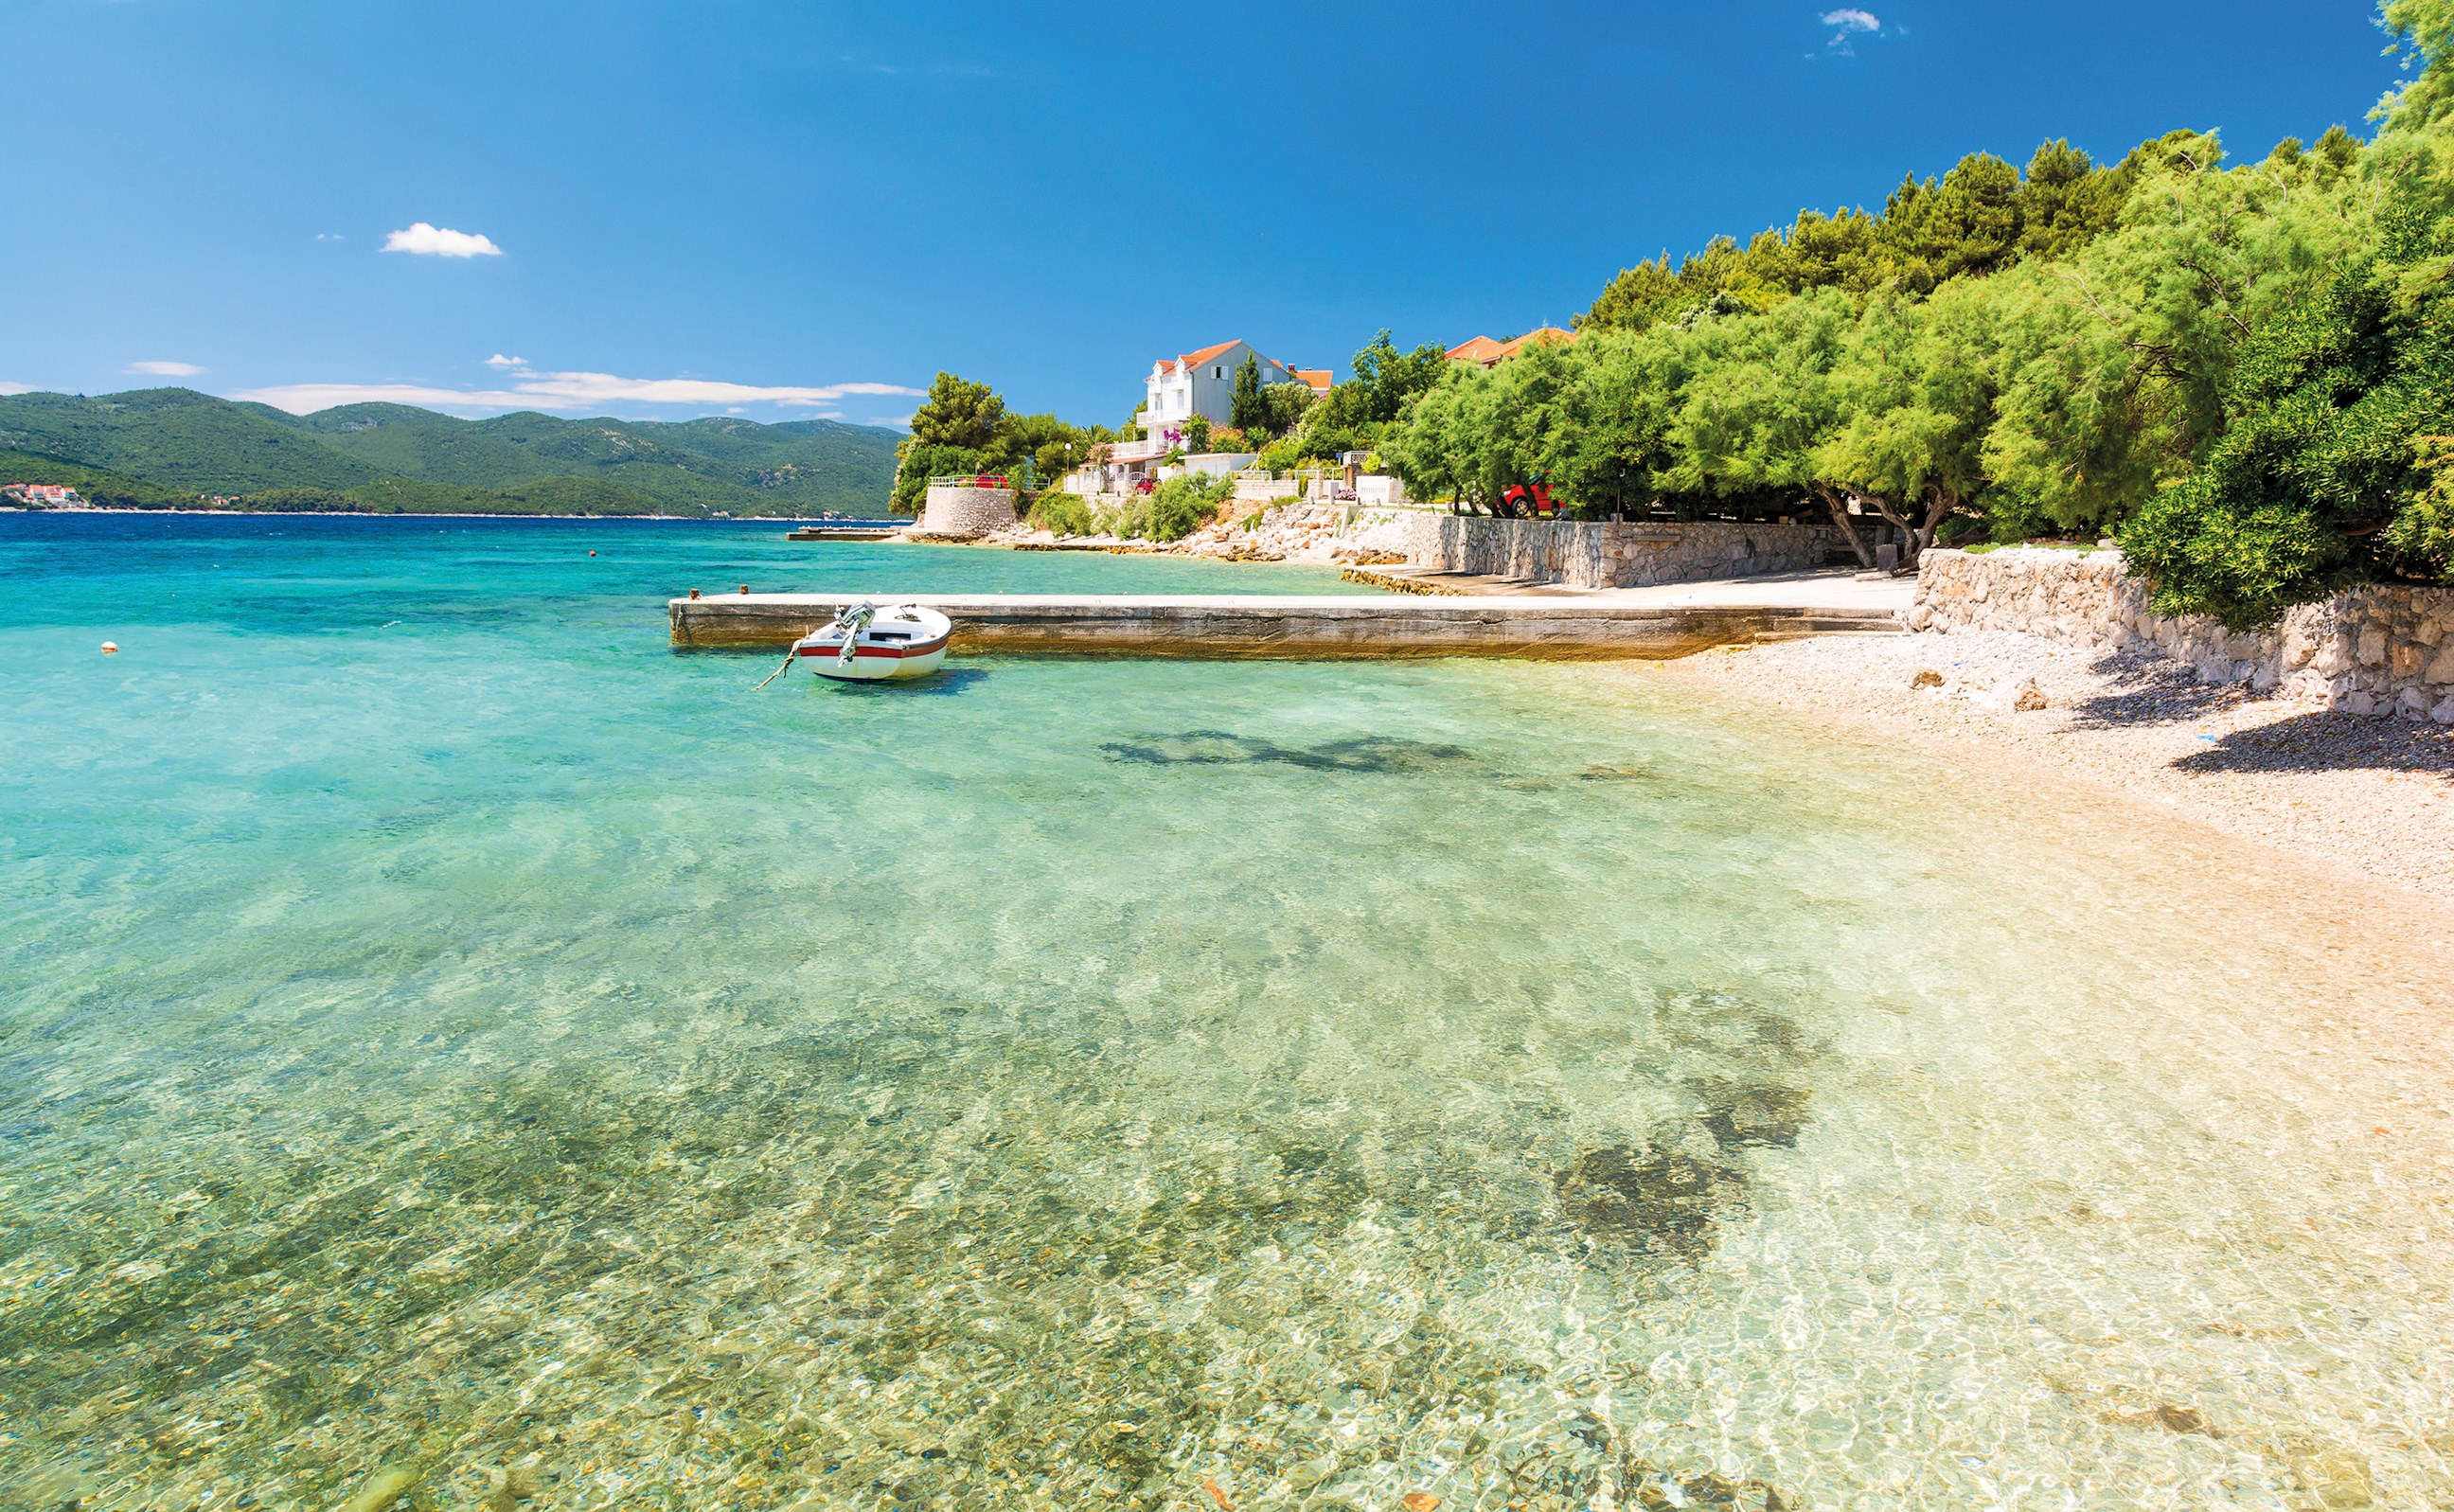 Cruise the Adriatic Sea from Dubrovnik - Dalmatian islands